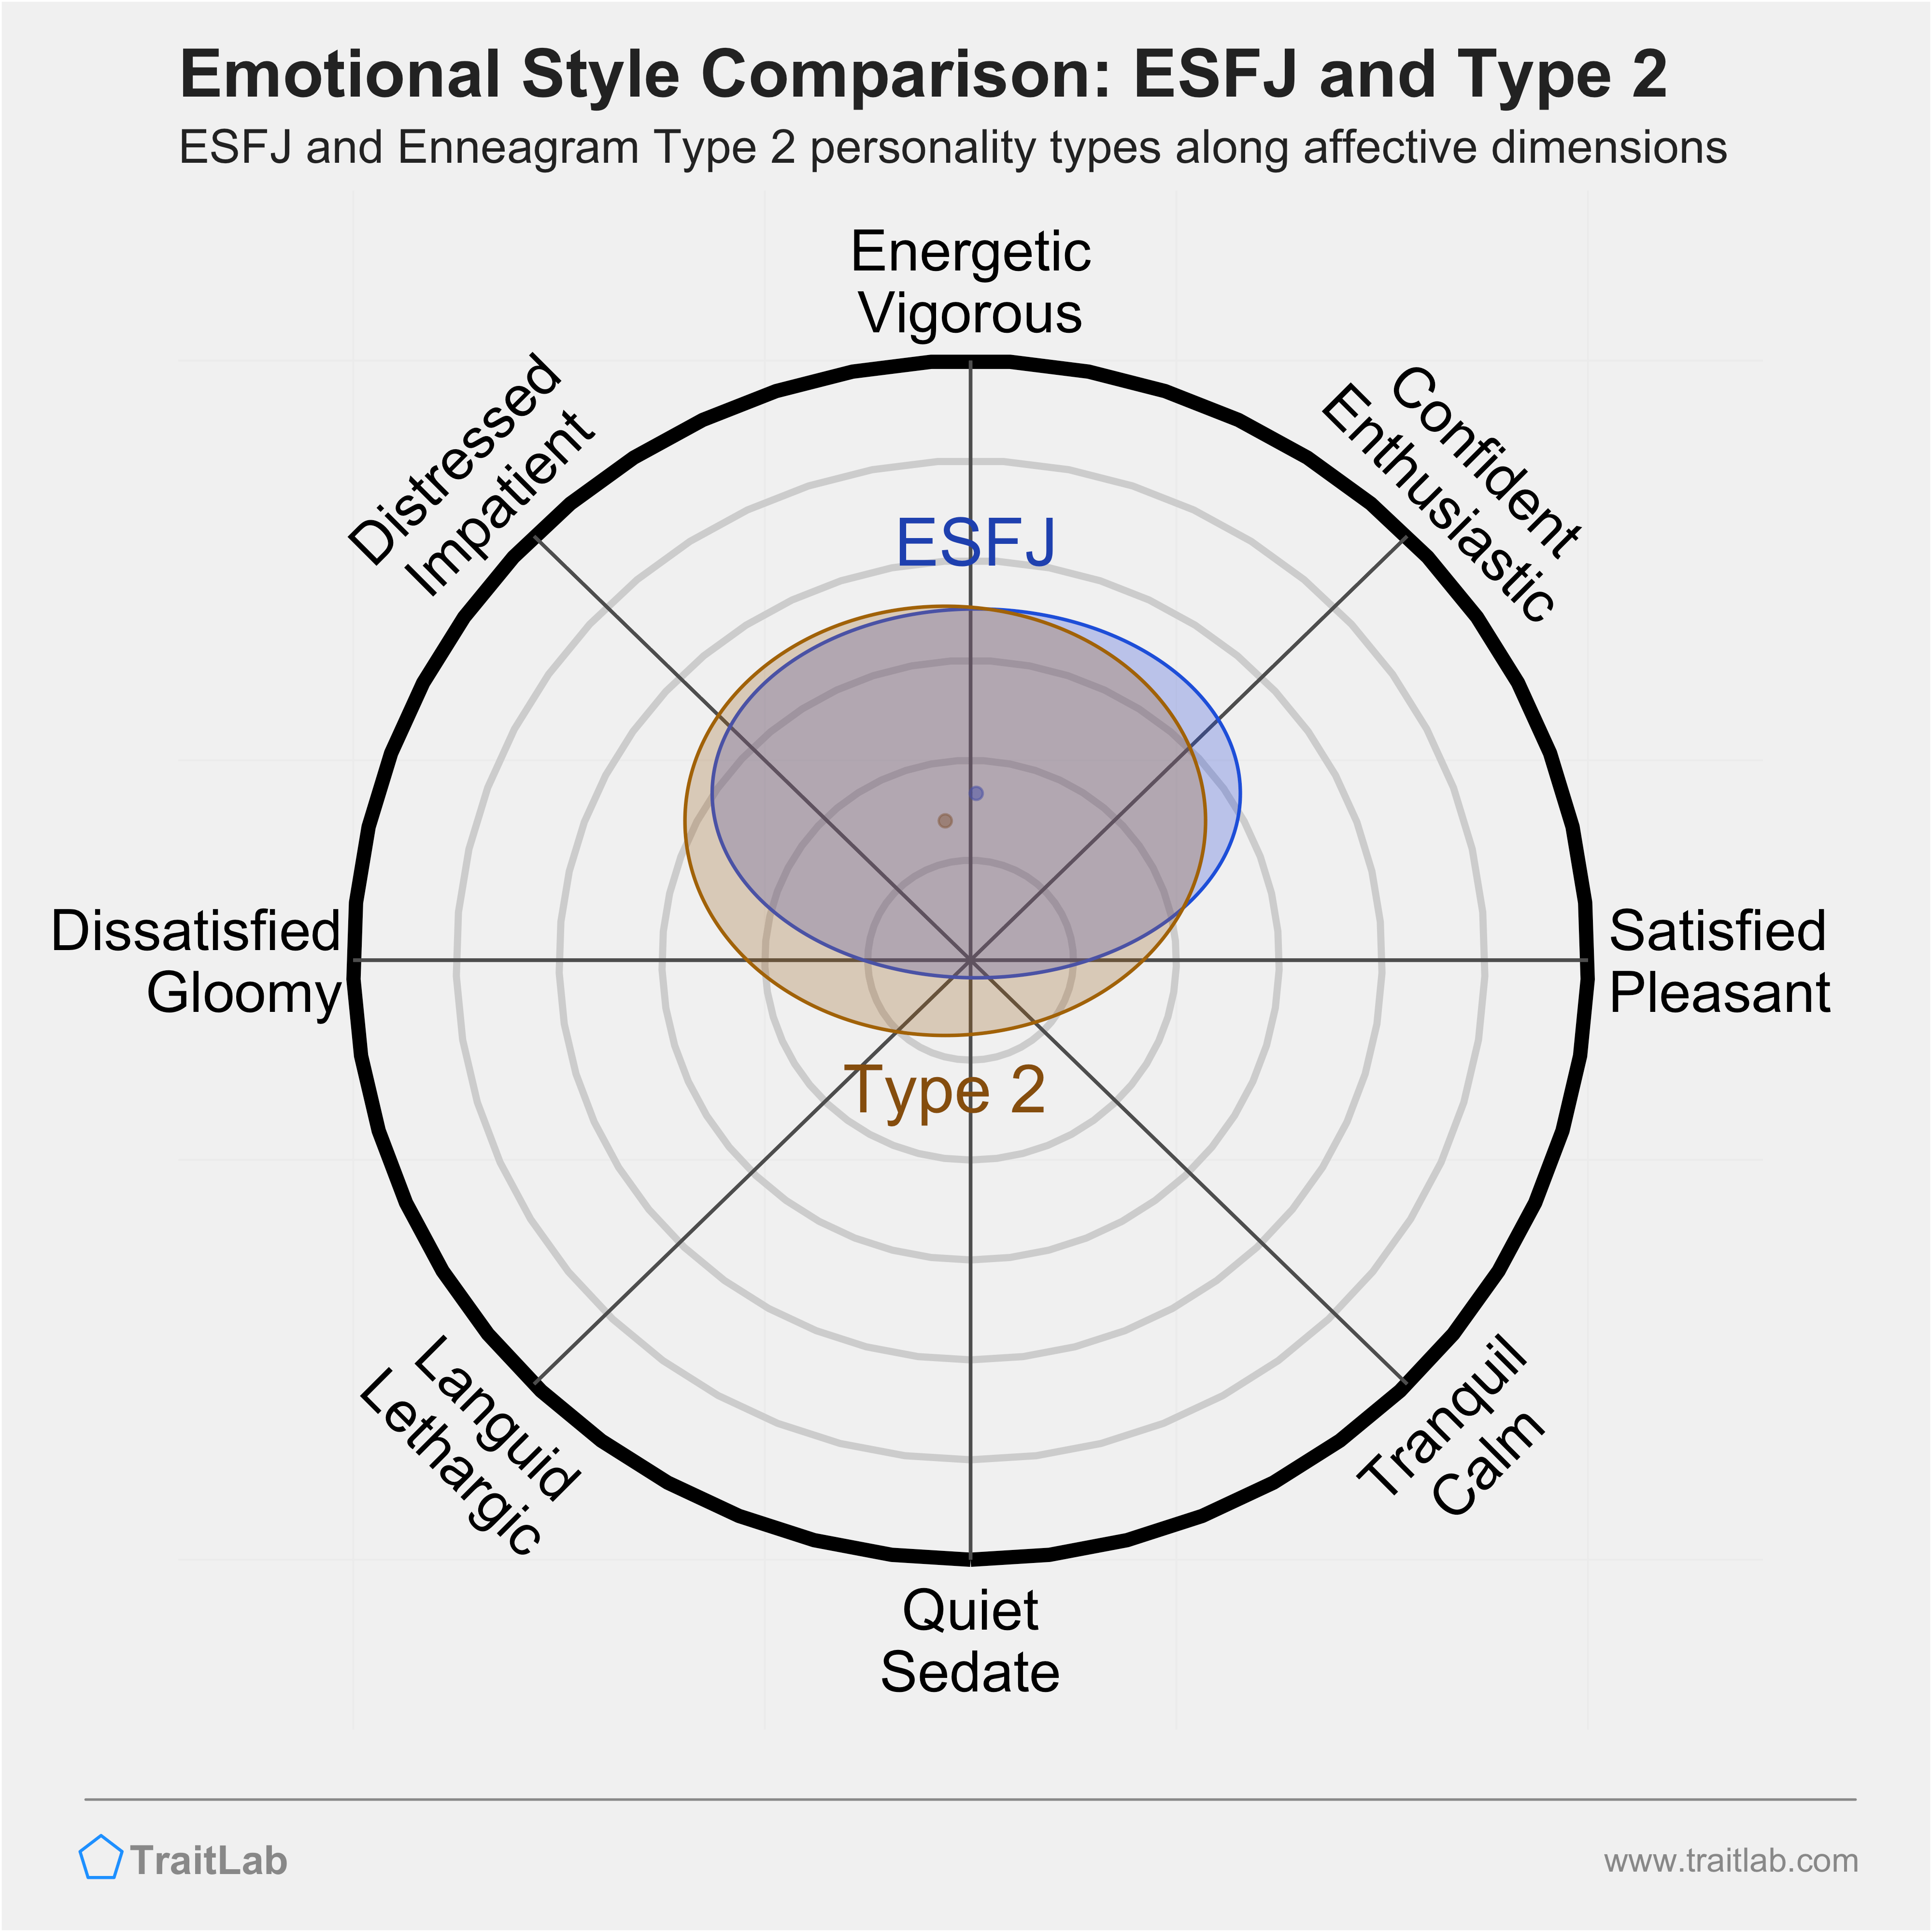 ESFJ and Type 2 comparison across emotional (affective) dimensions